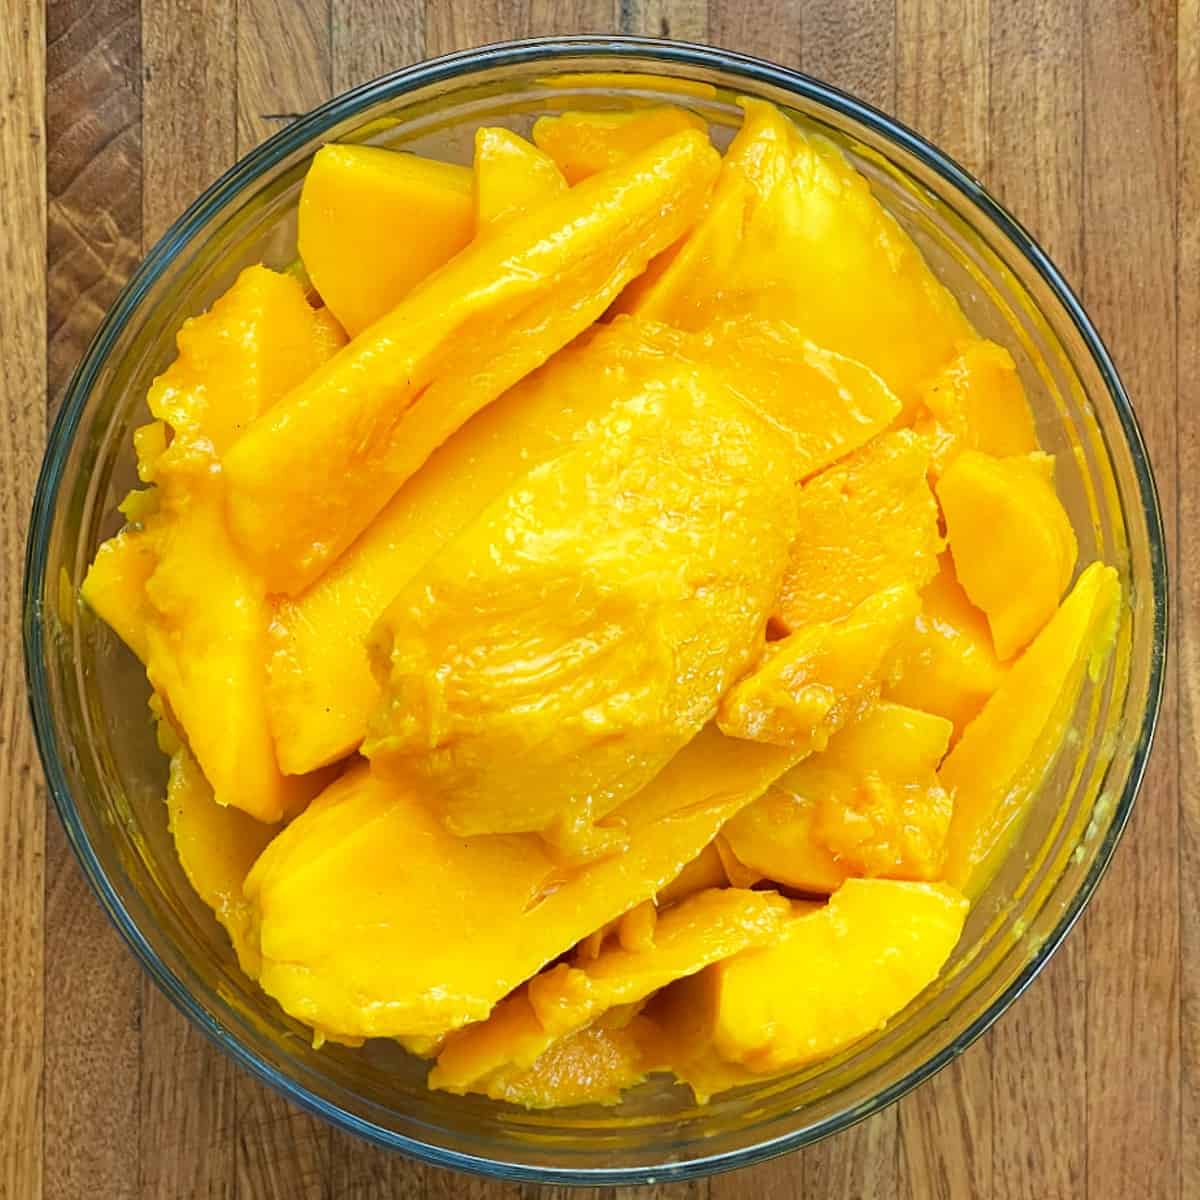 sliced mango for dehydrating.